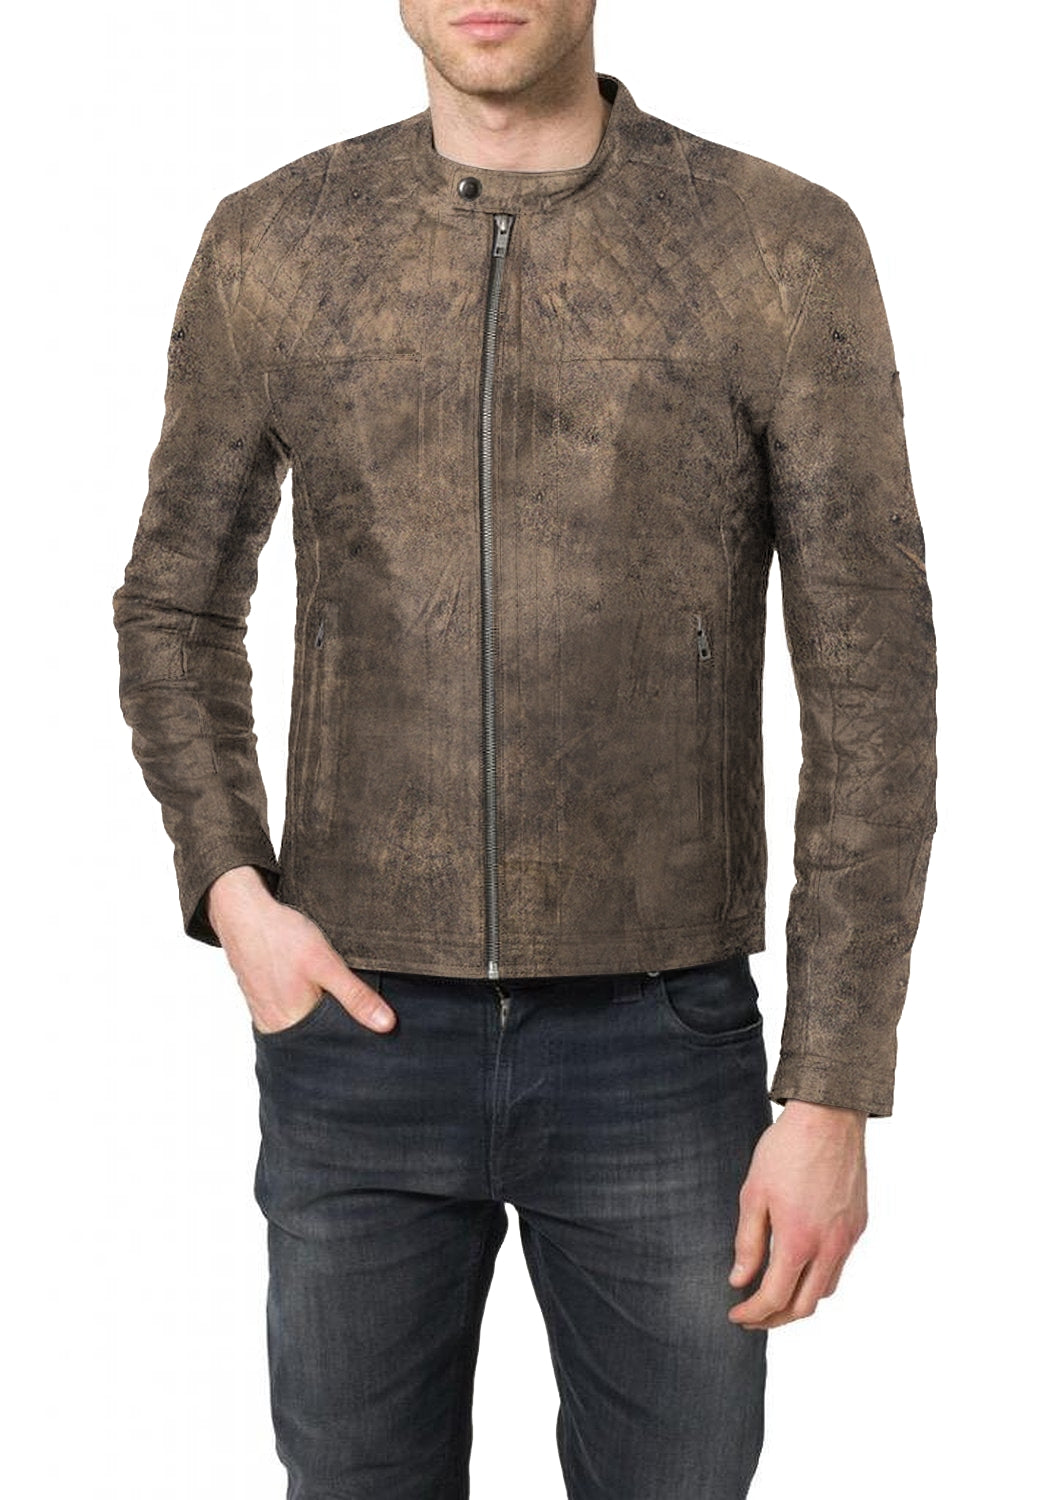 Leather Jackets Hub Mens Genuine Lambskin Leather Jacket (Black, Racer Jacket) - 1501082